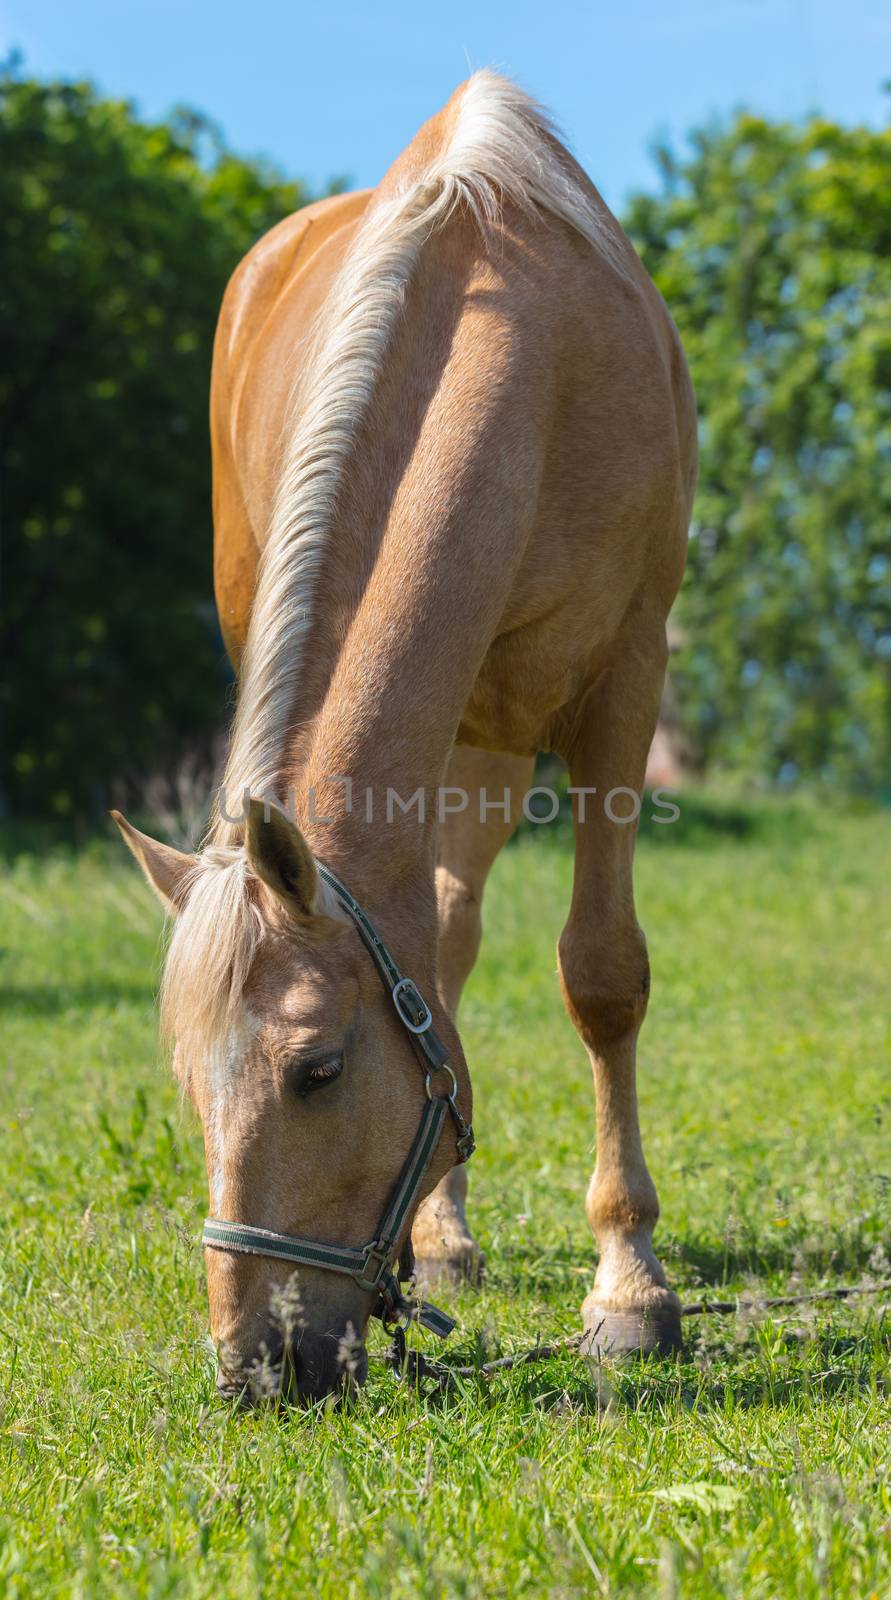 horse portrait closeup, eating the green grass